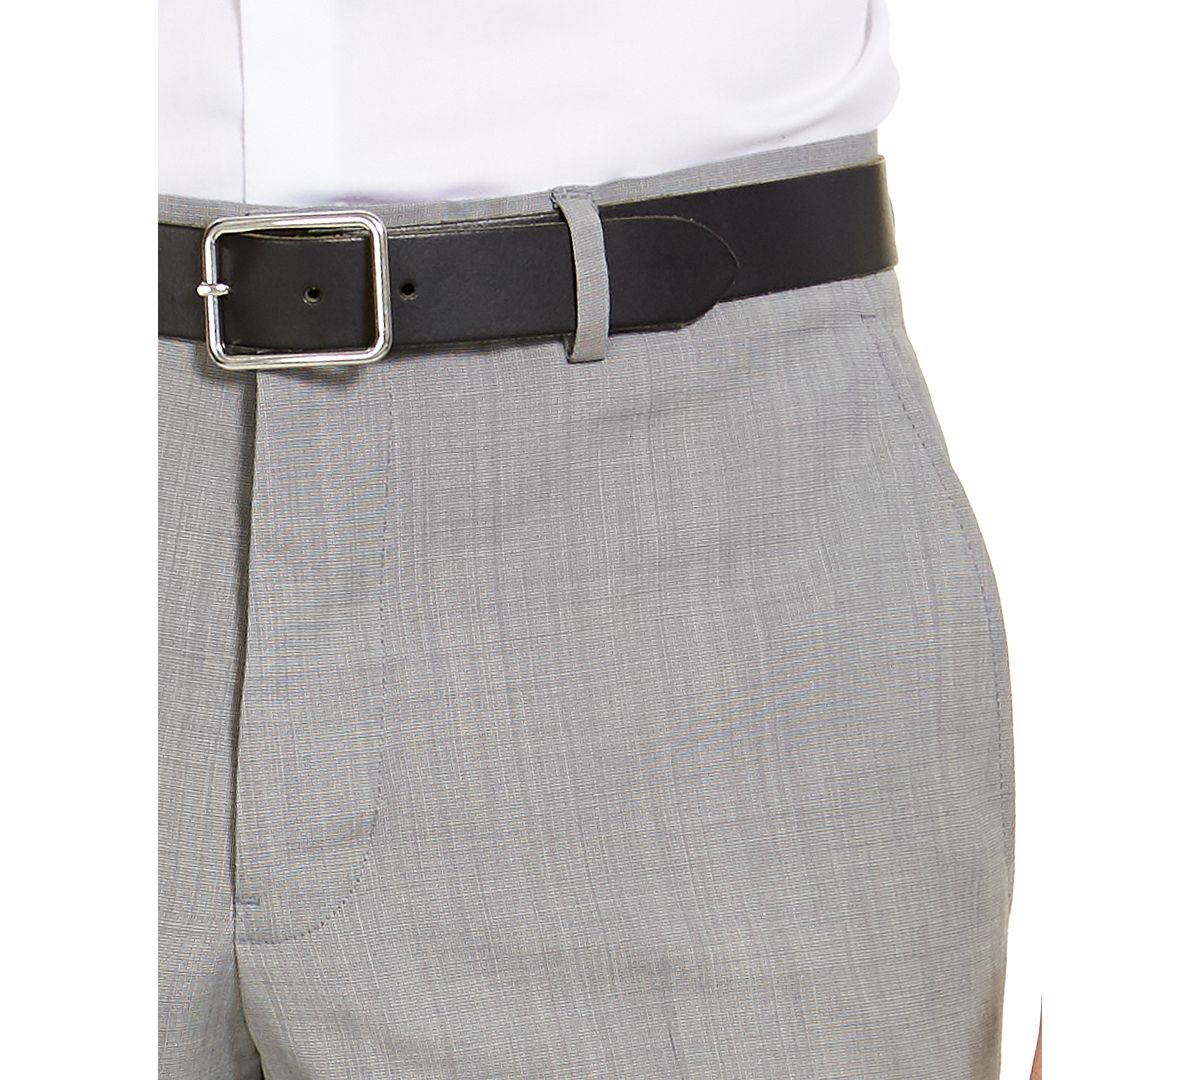 A|x Armani Exchange rmani Exchange Slim-fit Light Grey Wool Suit Separate Pants Light Grey